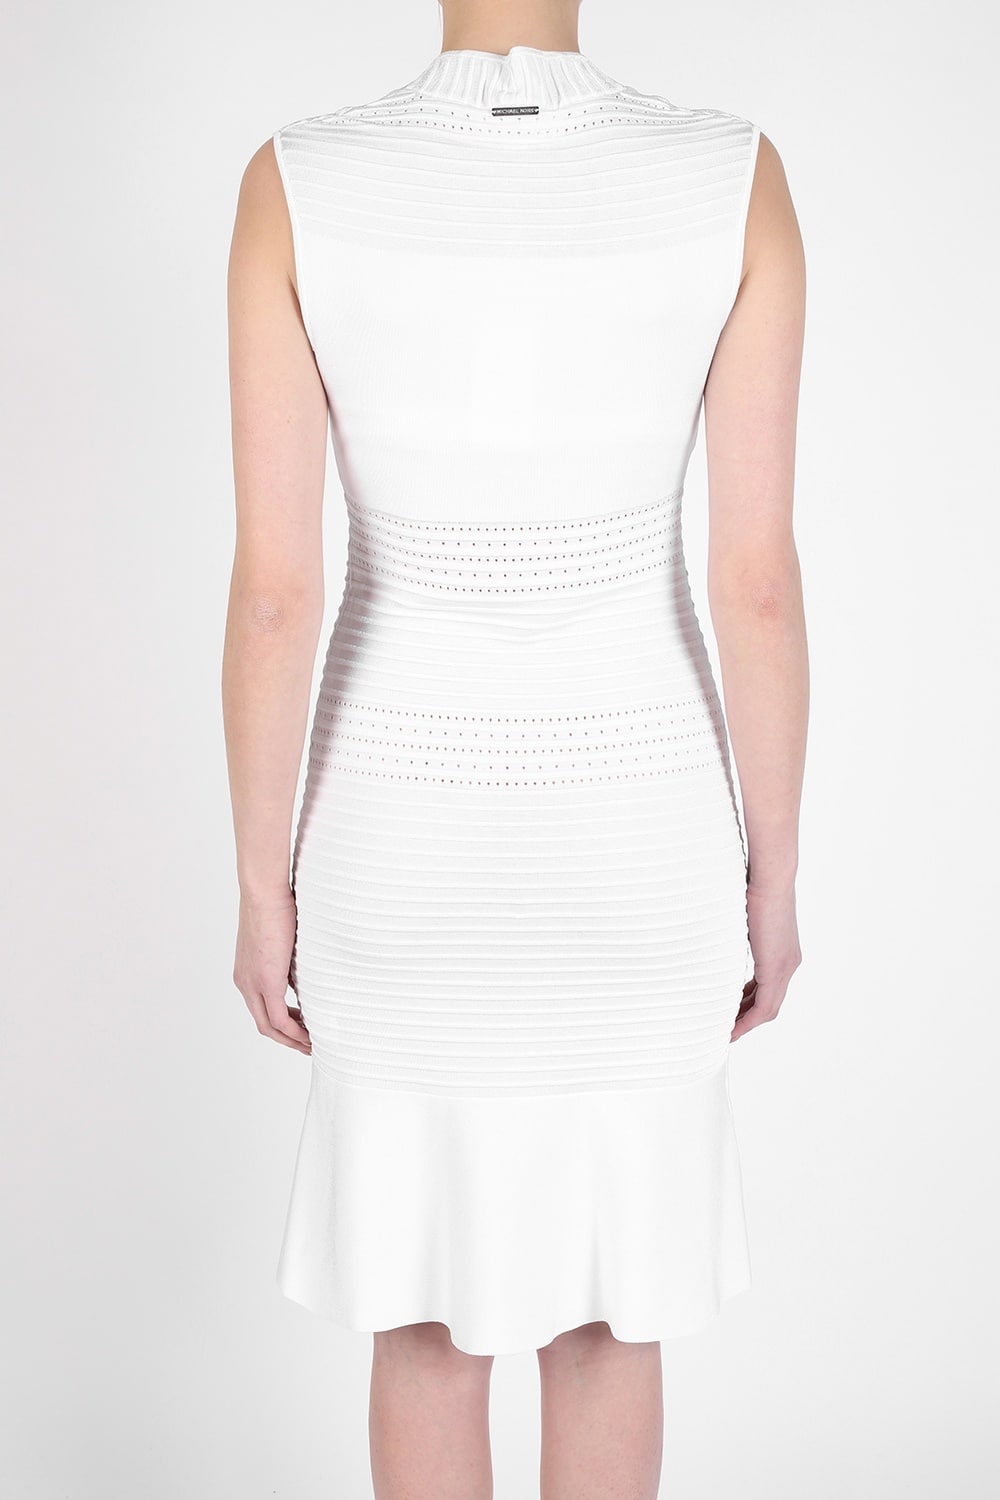 Michael Kors White Ribbed Dress